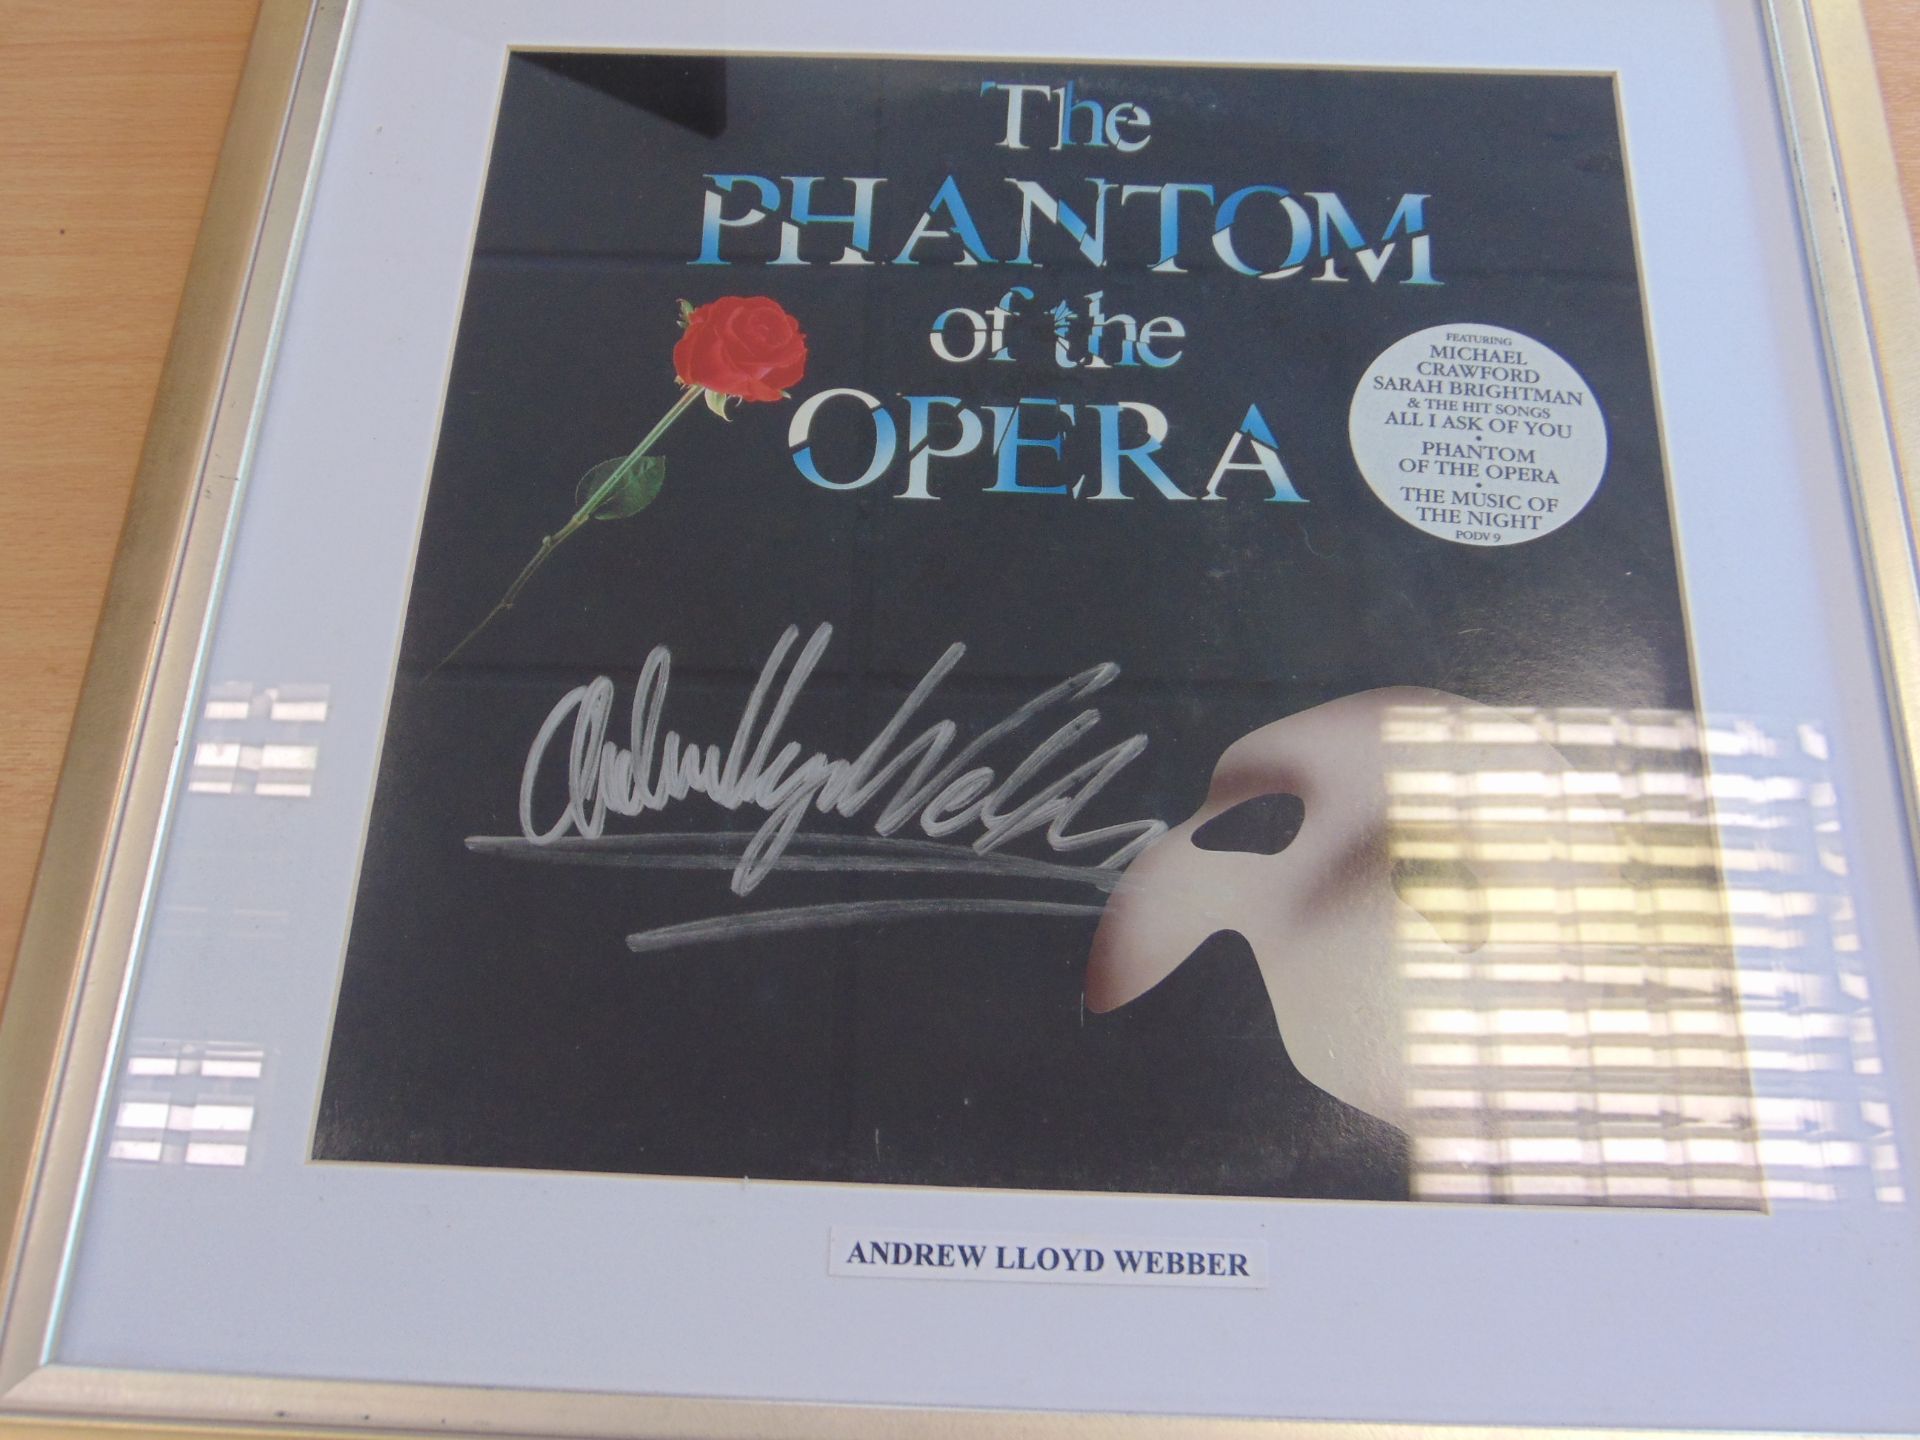 Superb Phantom of the Opera signed by Andrew Lloyd Webber Staring Michael Crawford & Sarah Brightman - Image 2 of 4